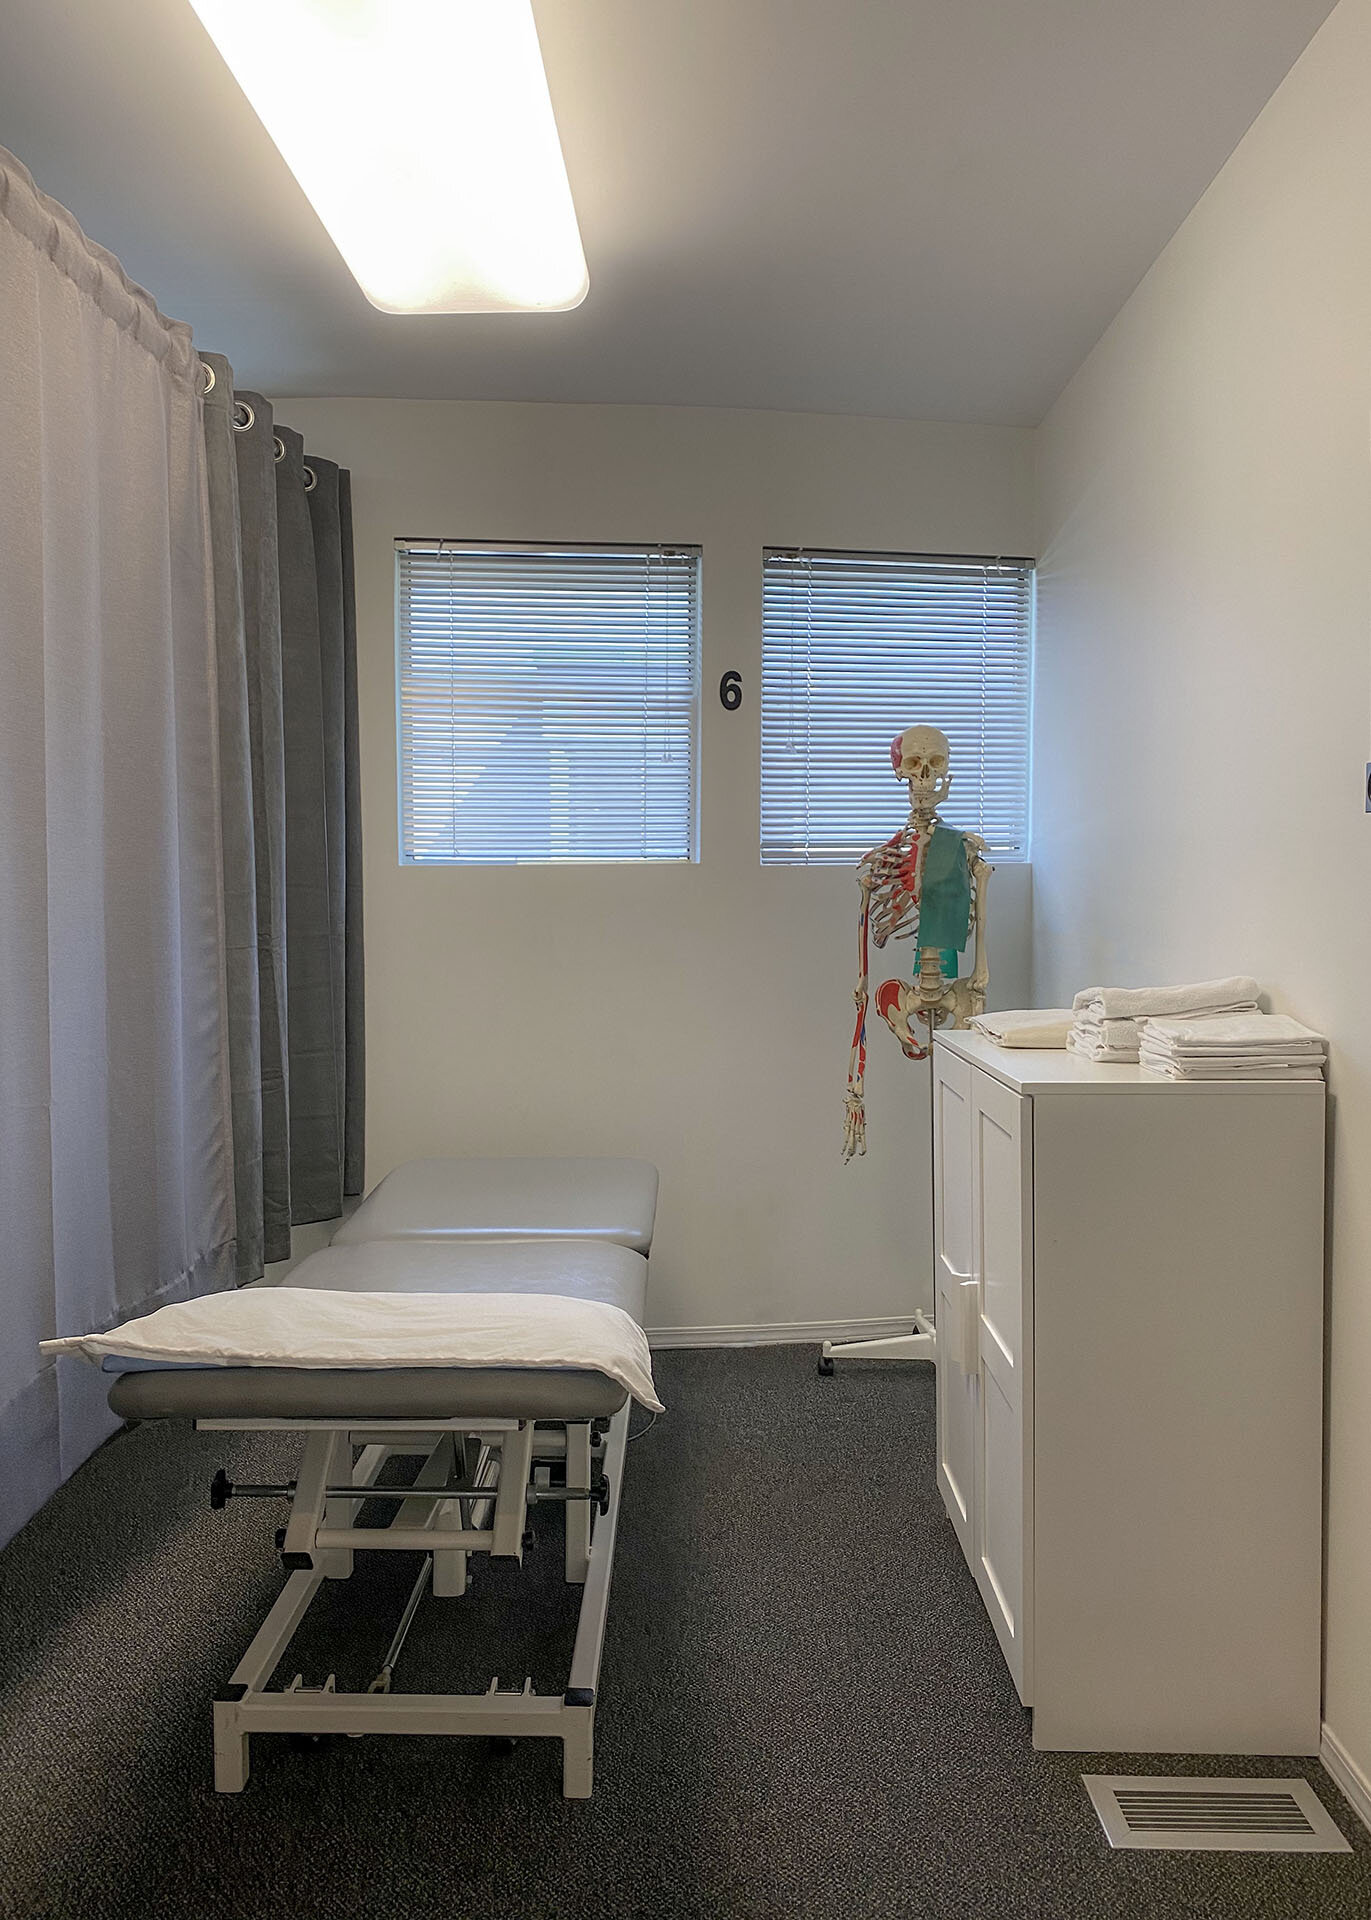 Pitt Meadows Physiotherapy Room 6 Skeleton Anatomy